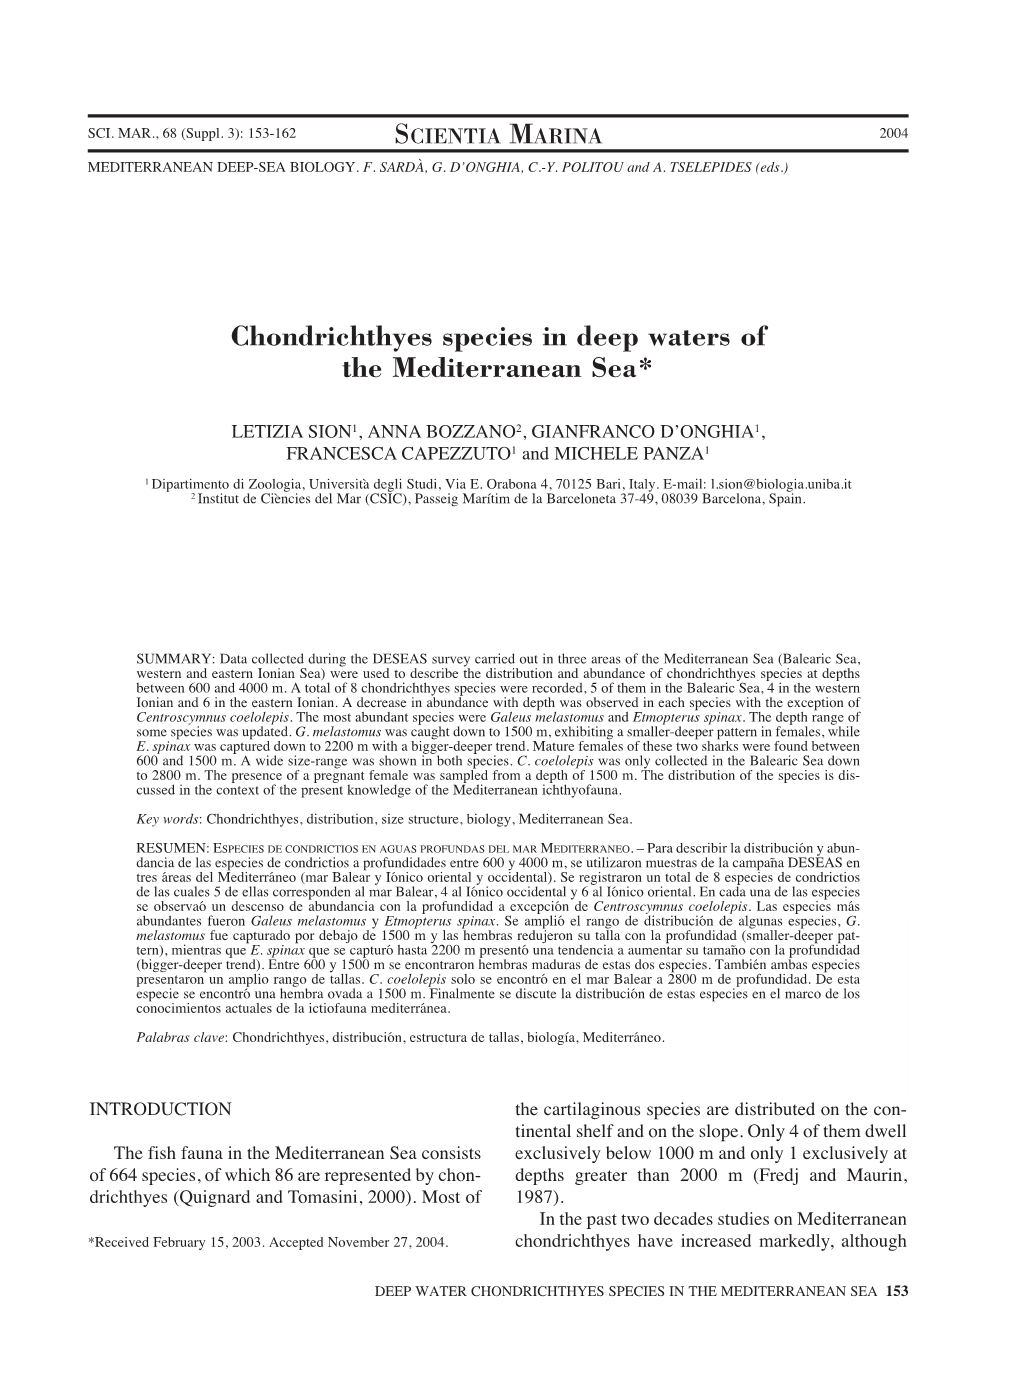 Chondrichthyes Species in Deep Waters of the Mediterranean Sea*